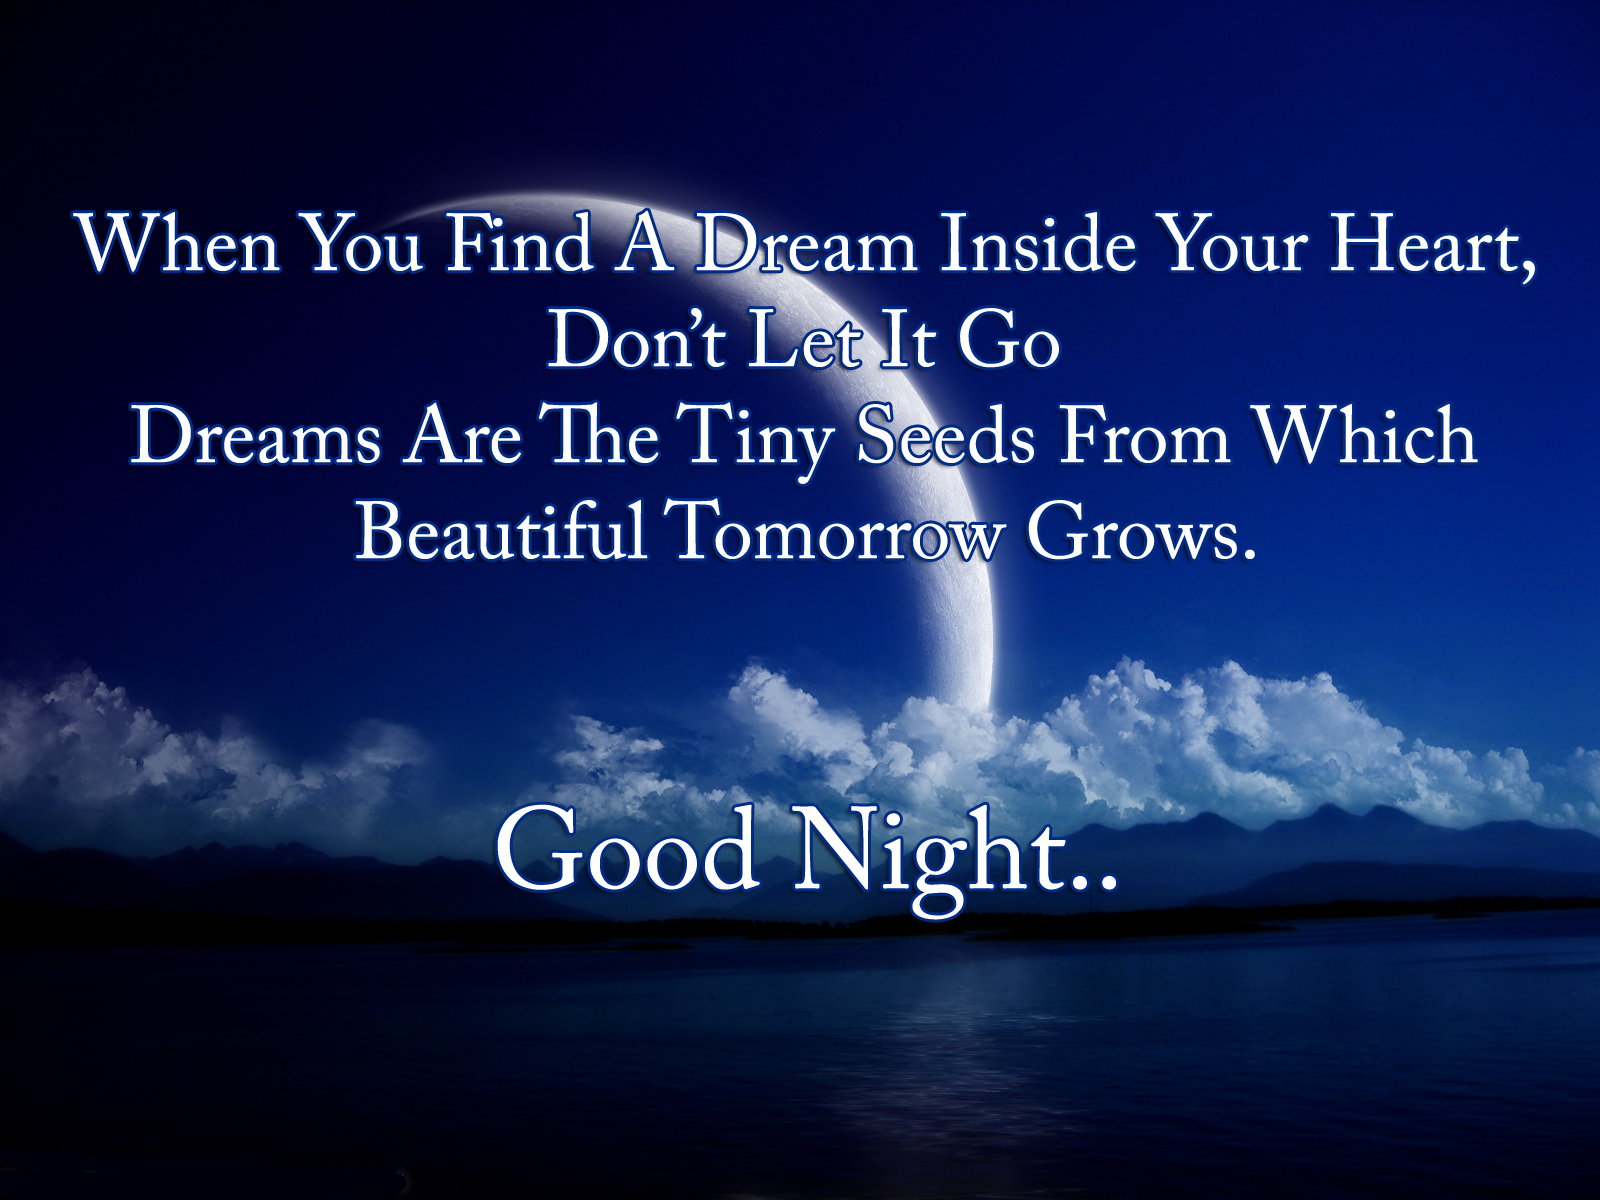 Night night love poems